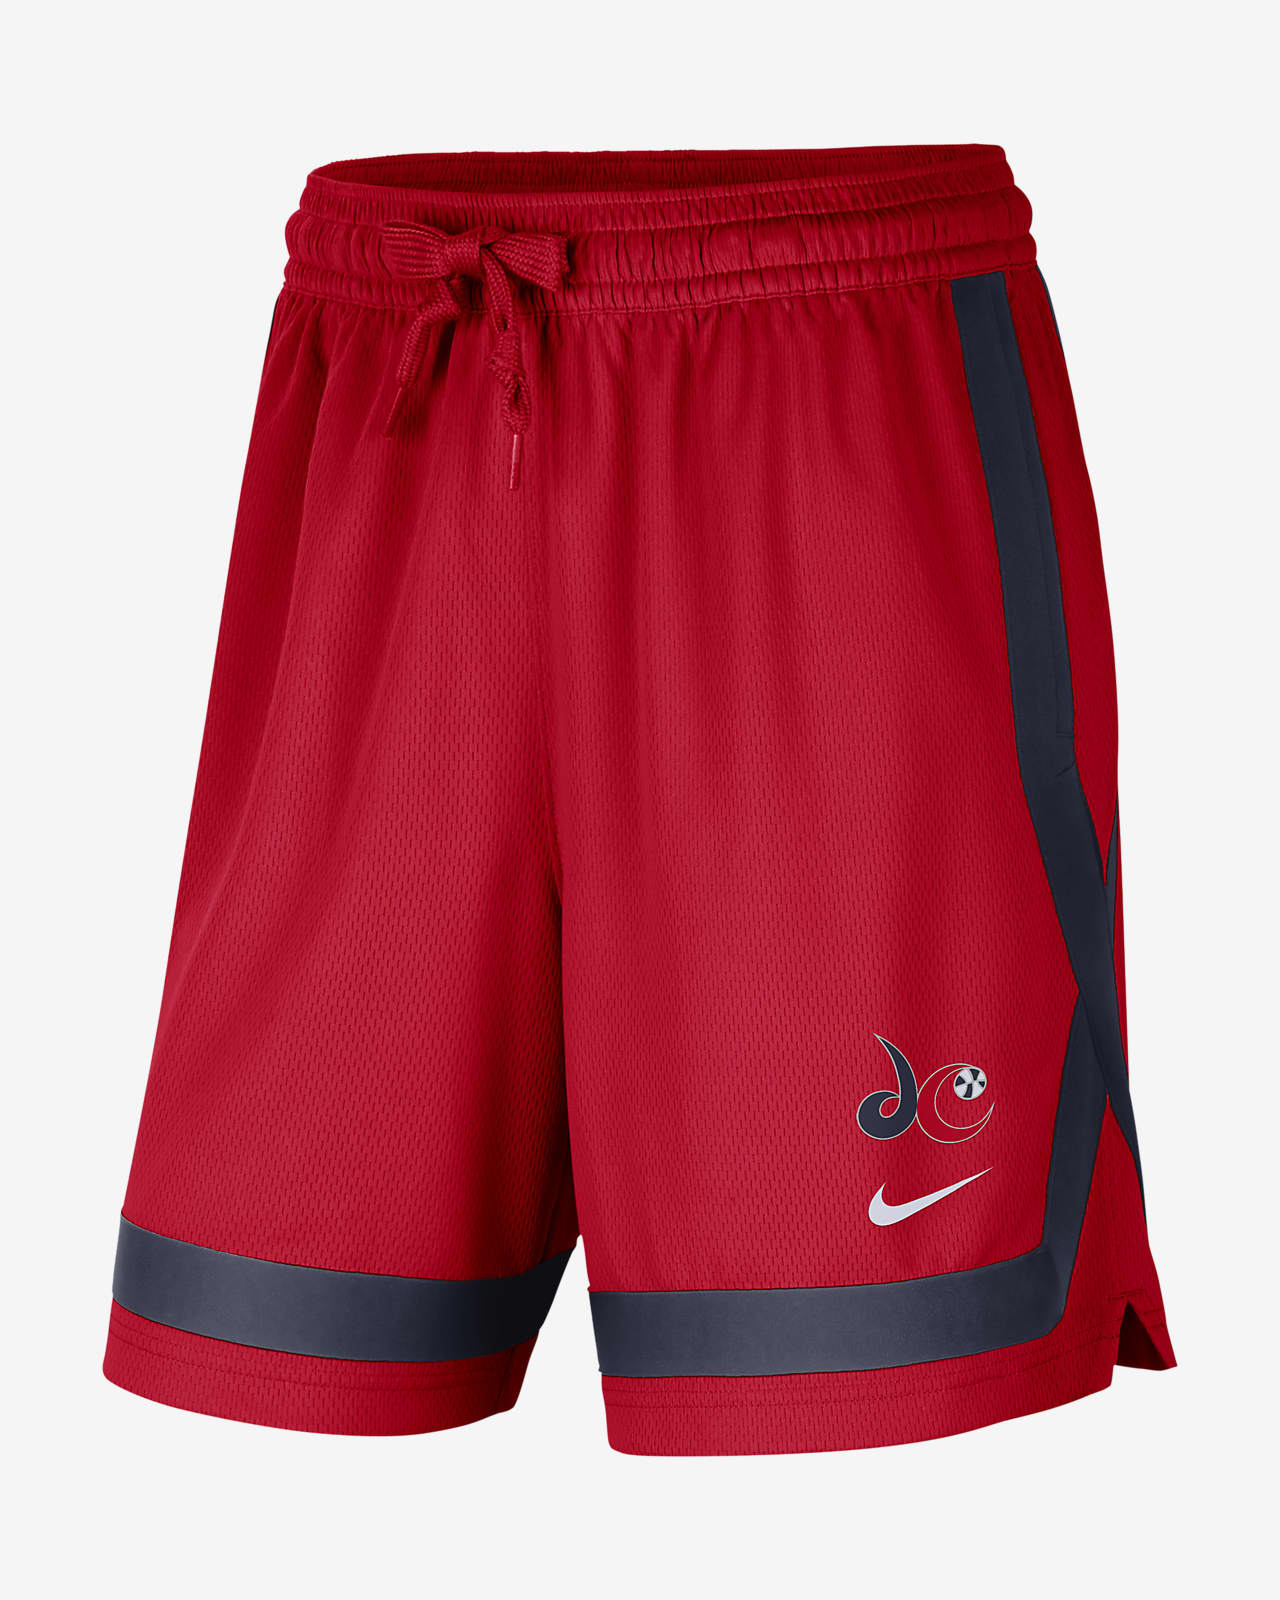 Washington Mystics Women's Nike WNBA Practice Shorts